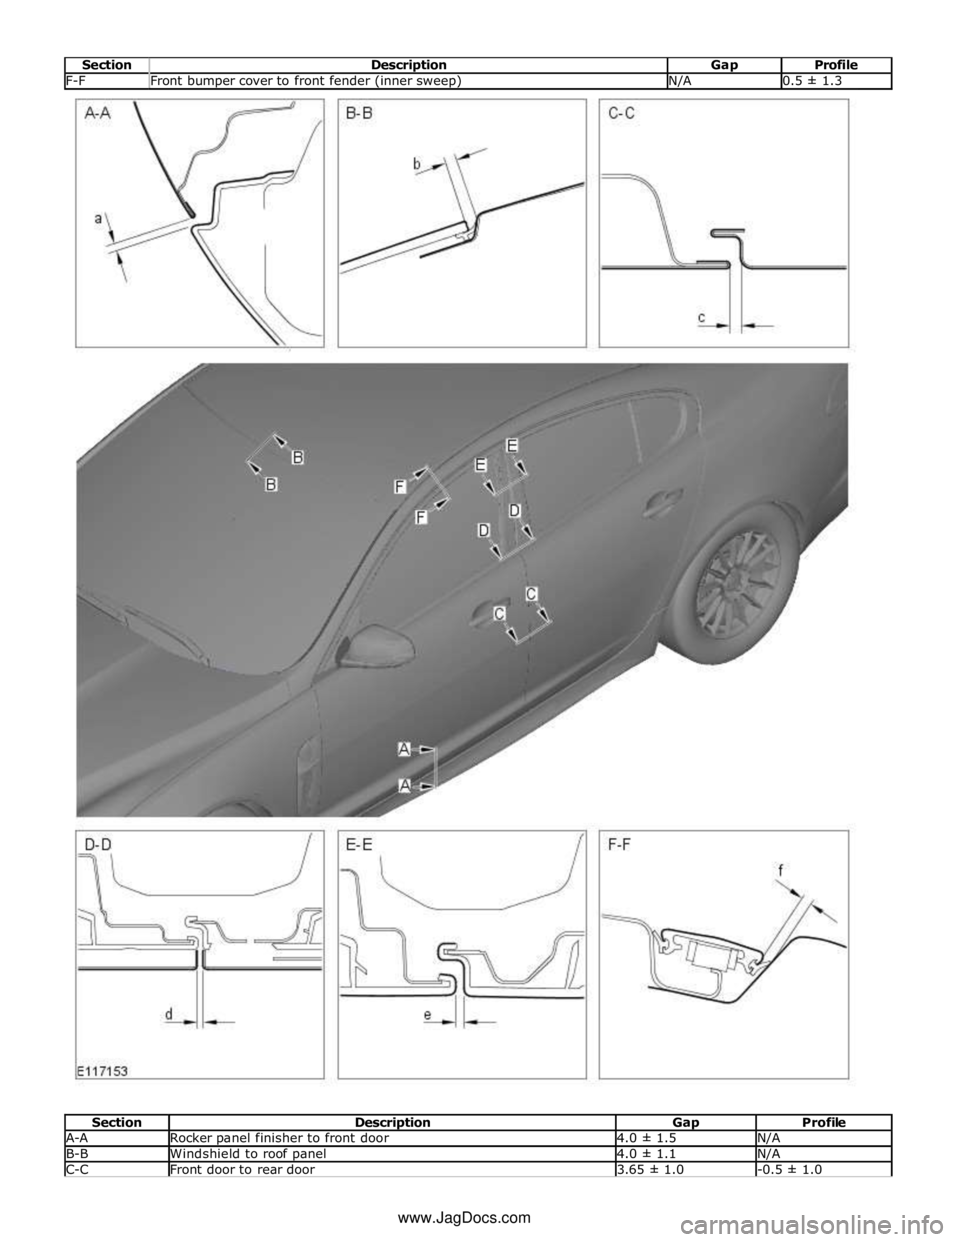 JAGUAR XFR 2010 1.G Workshop Manual  
Section Description Gap Profile F-F Front bumper cover to front fender (inner sweep) N/A 0.5 ± 1.3  
 
 
 
 
 
 
 
 
 
 
 
 
 
 
 
 
 
 
 
 
 
 
 
 
 
 
 
 
 
 
 
 
 
 
 
 
 
 
 
 
 
 
 
 
 
 
 
 
